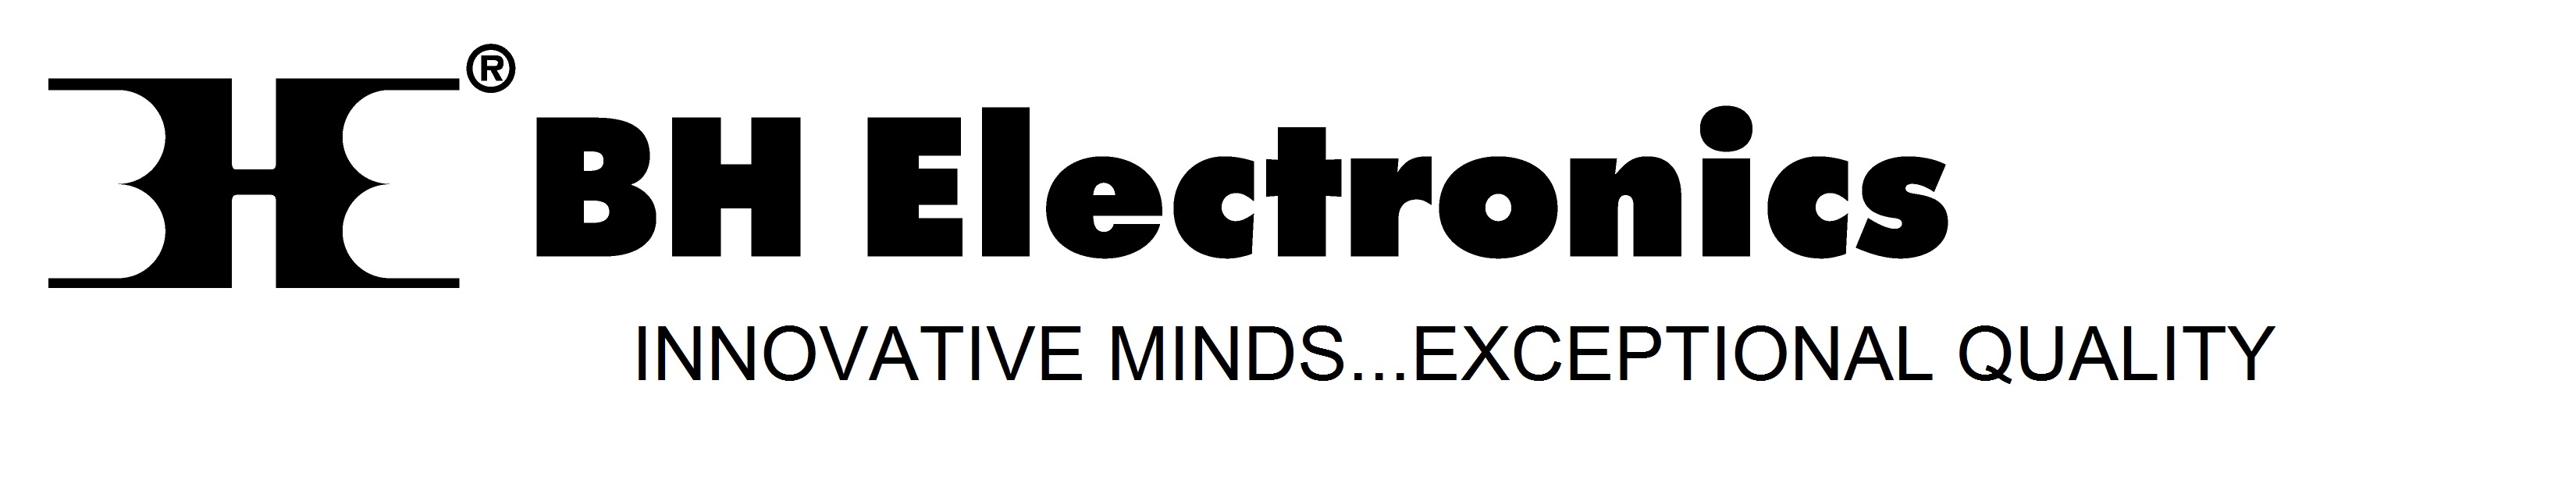 BH Electronics logo